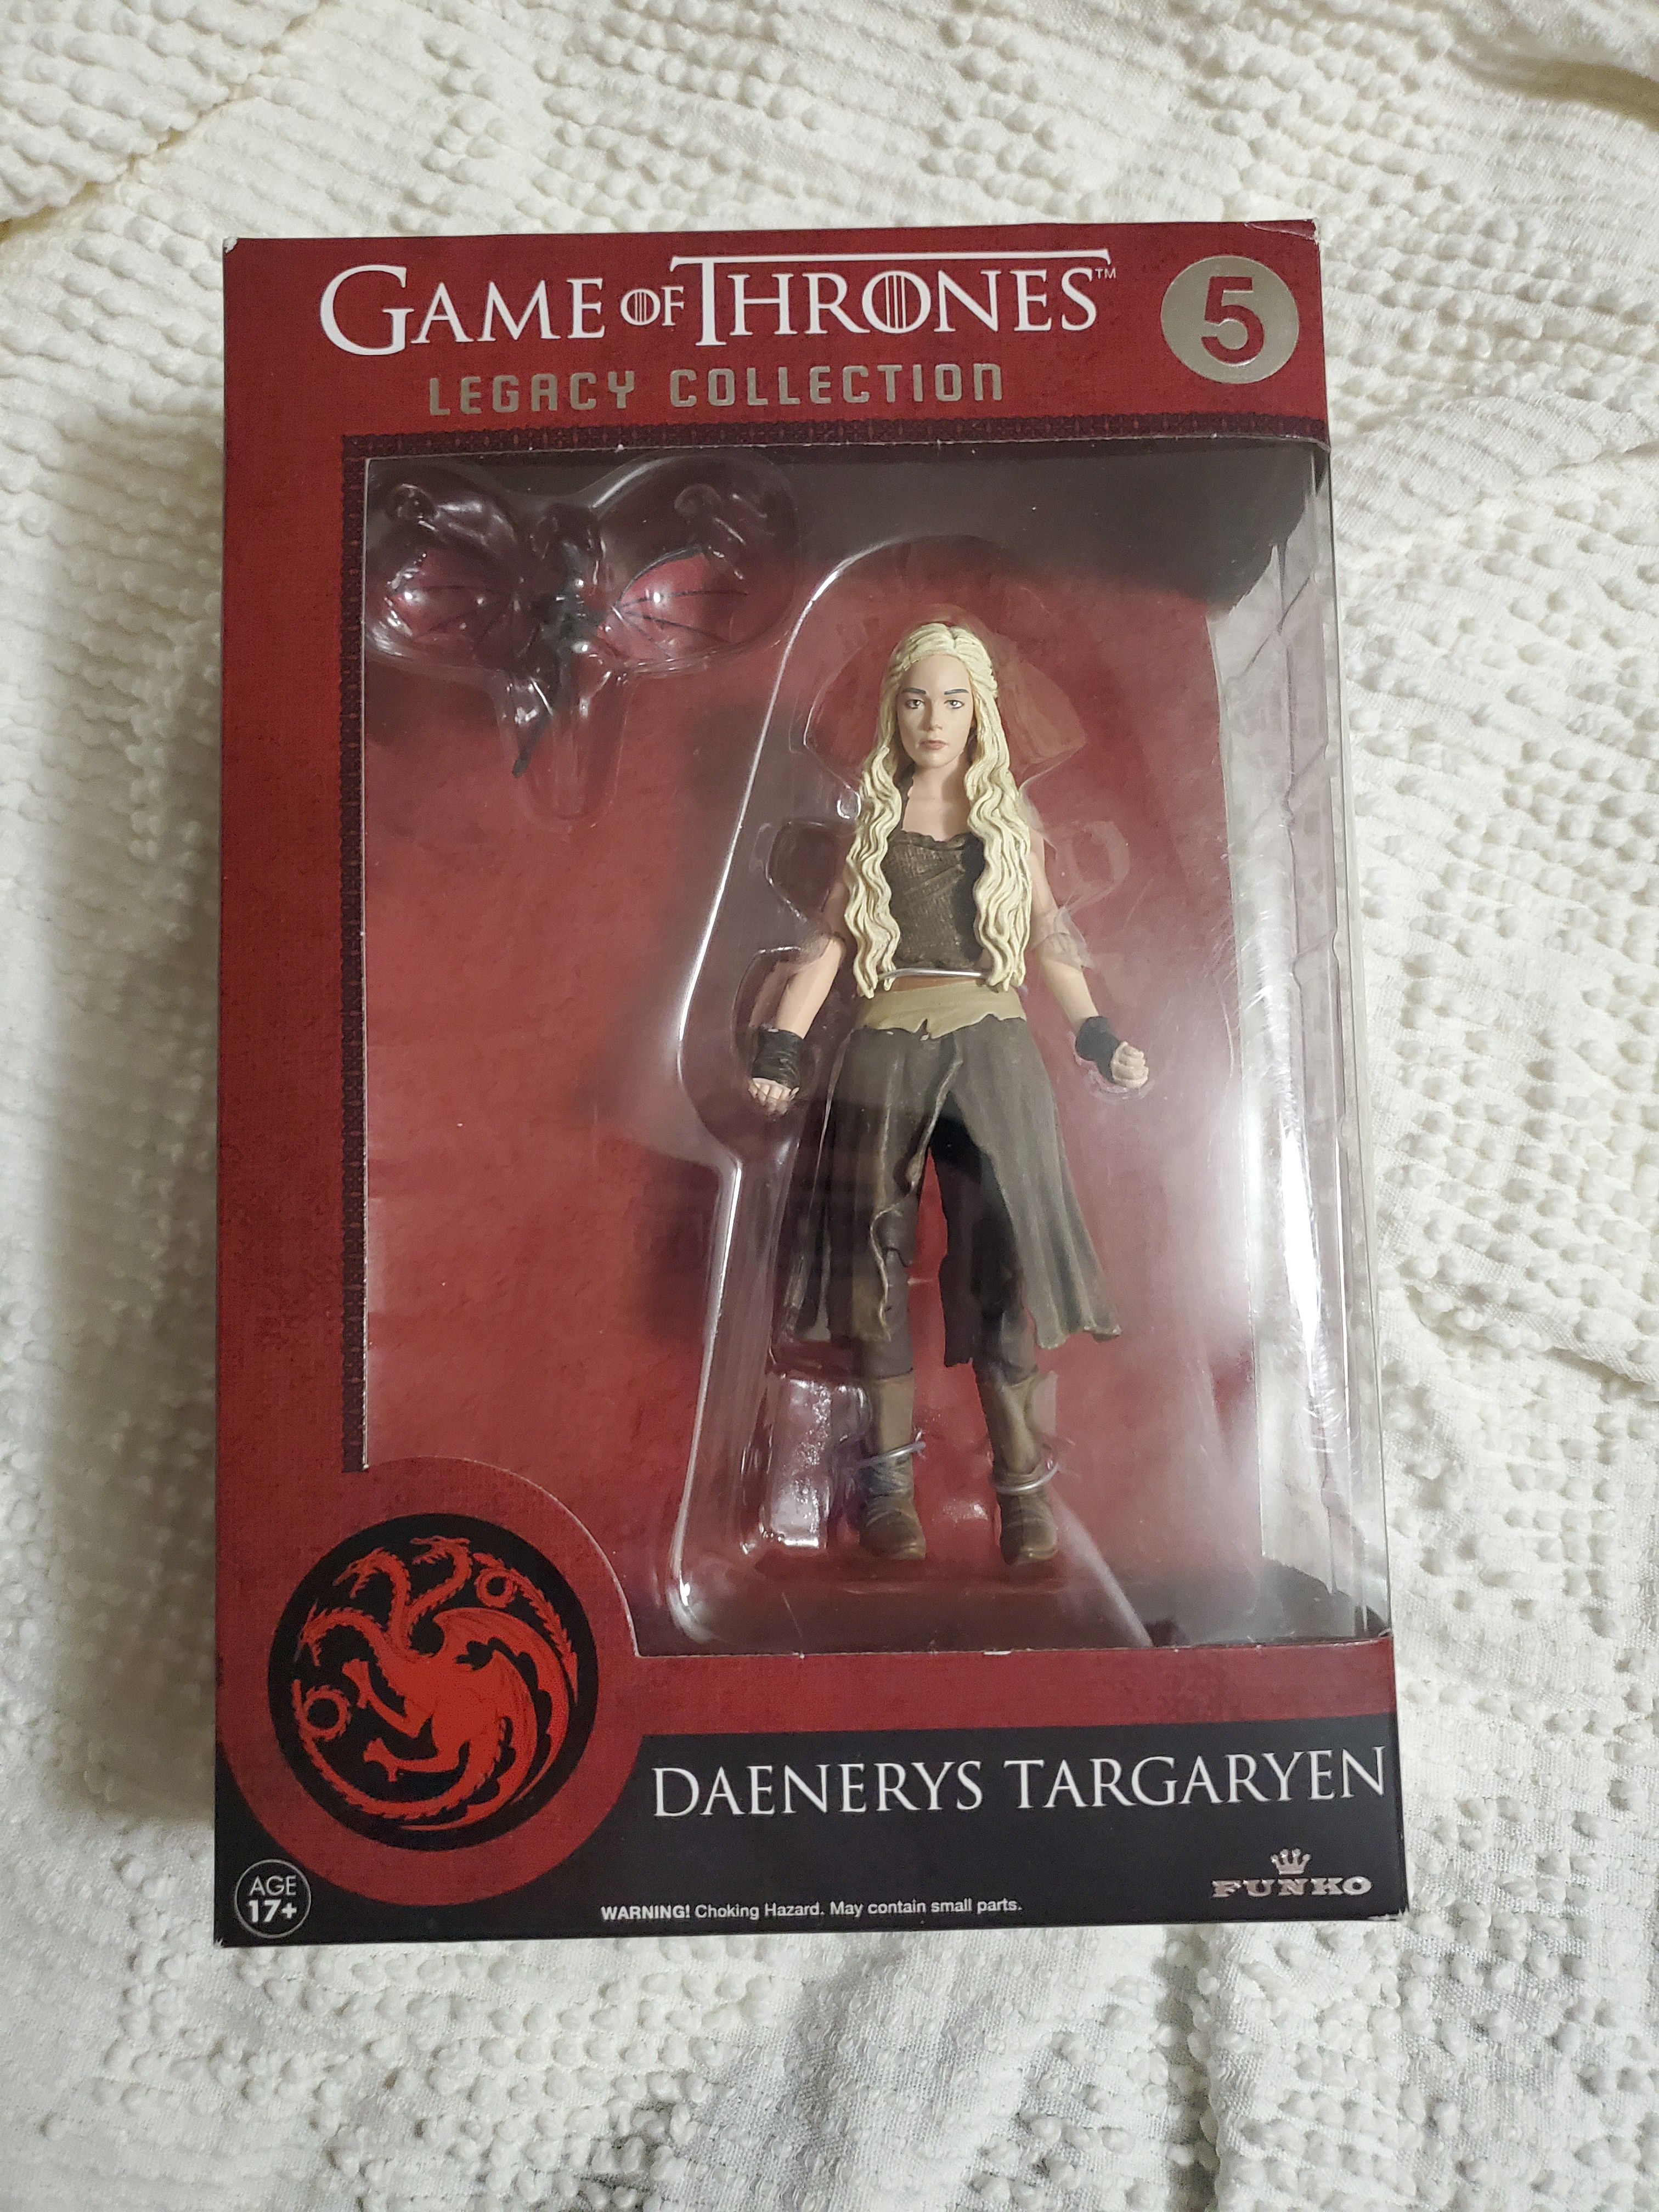 Daenerys Targaryen Action Figure, Game of Thrones Legacy Collection #5 FUNKO HBO